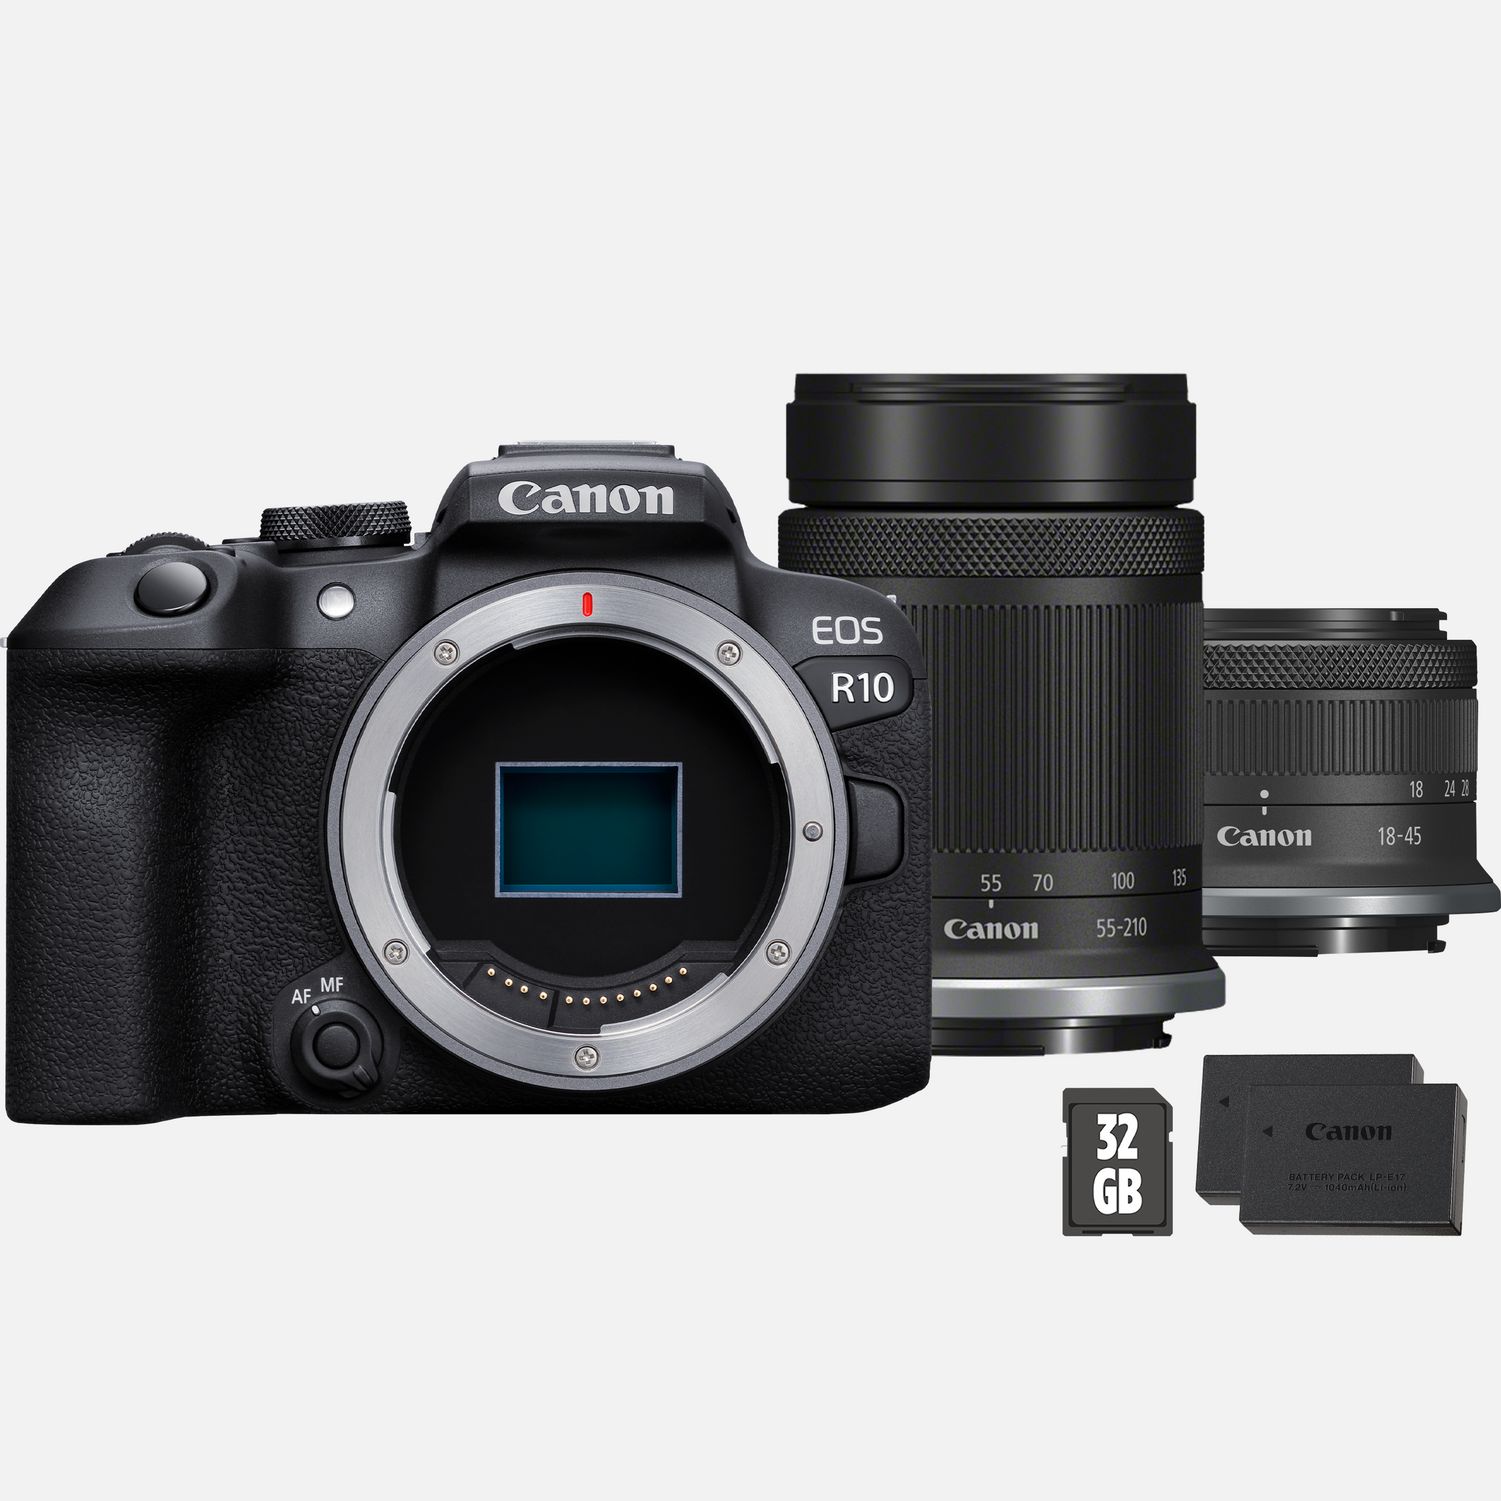 Buy Canon EOS R10 spiegellose Canon Ersatzakku WLAN-Kameras in RF-S Schweiz Objektiv RF-S Objektiv Kamera 55-210mm + Shop + SD-Karte + + 18-45mm —